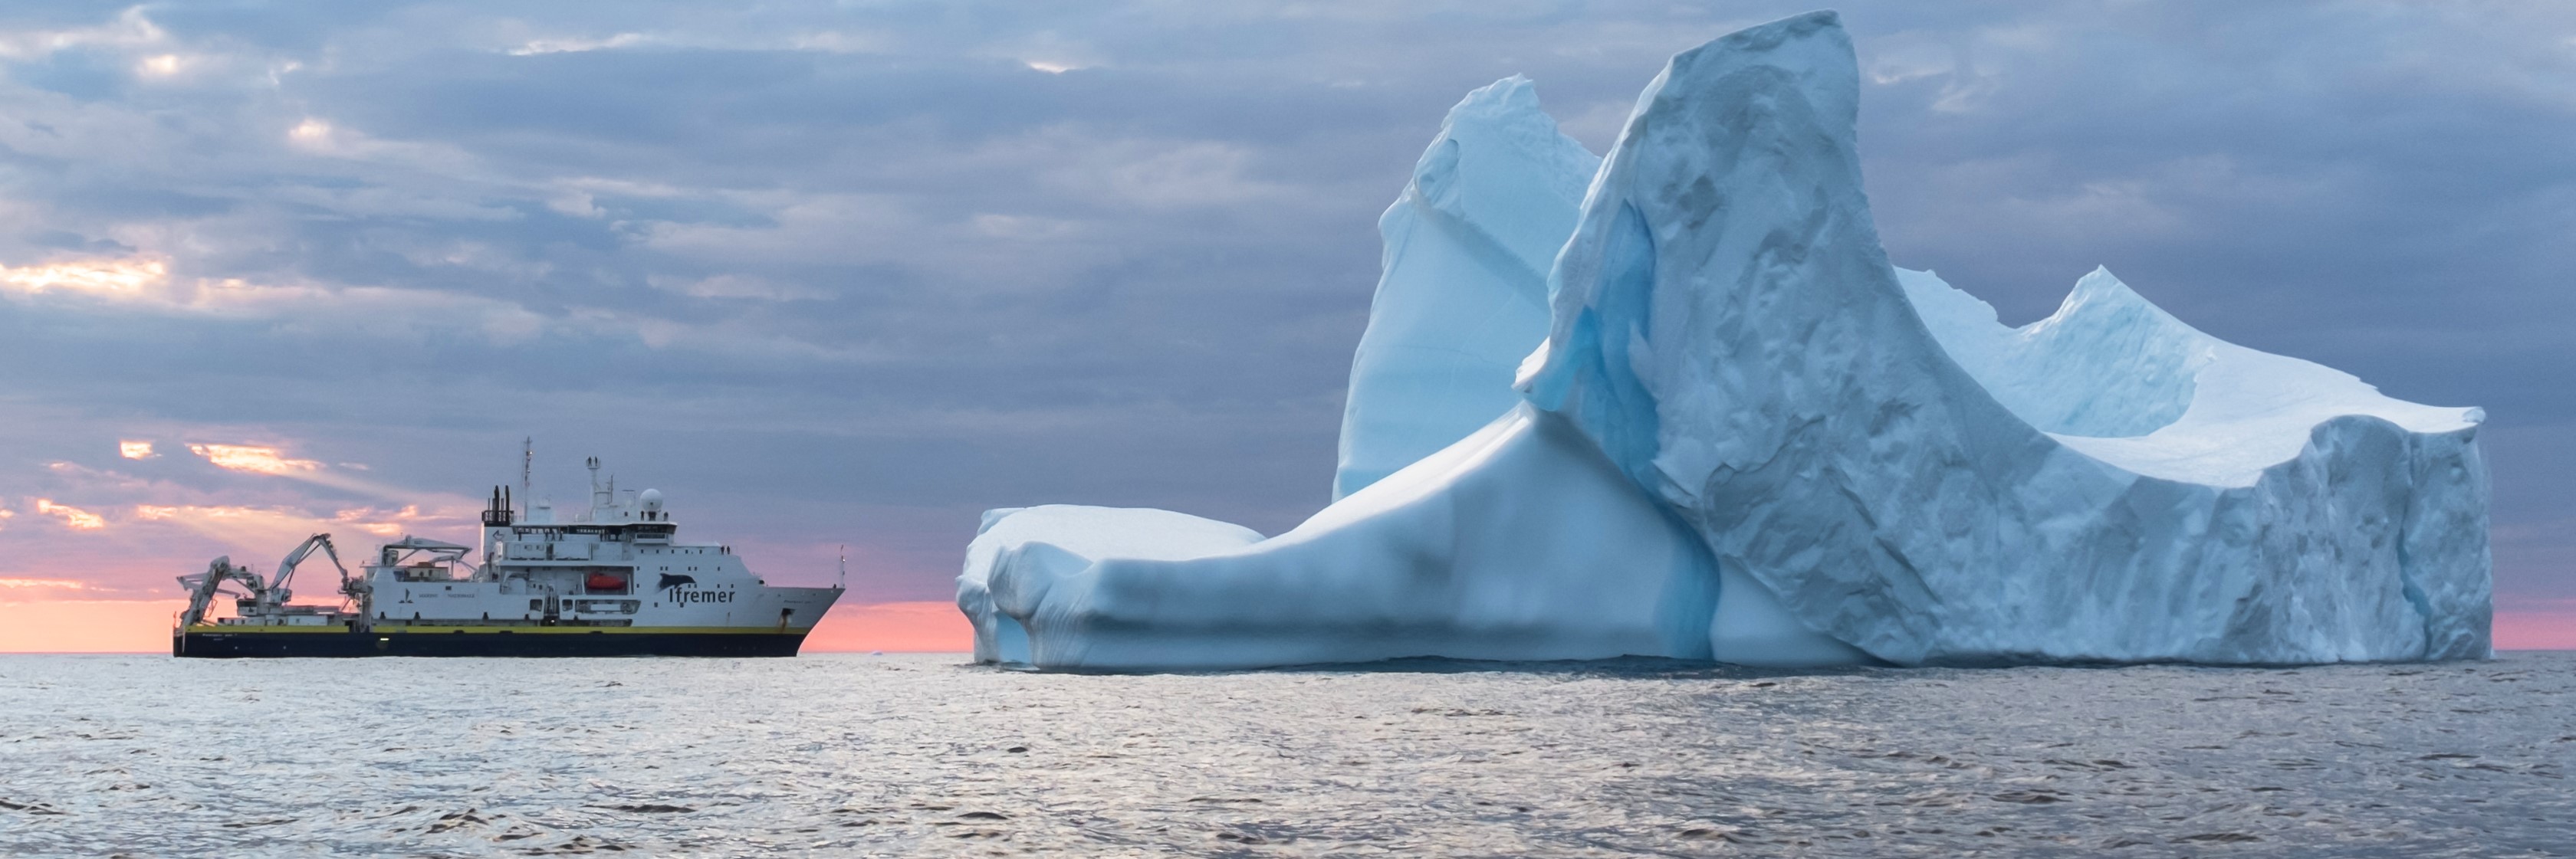 PourquoiPas?-Iceberg-Geovide ©LTreluyer_2007